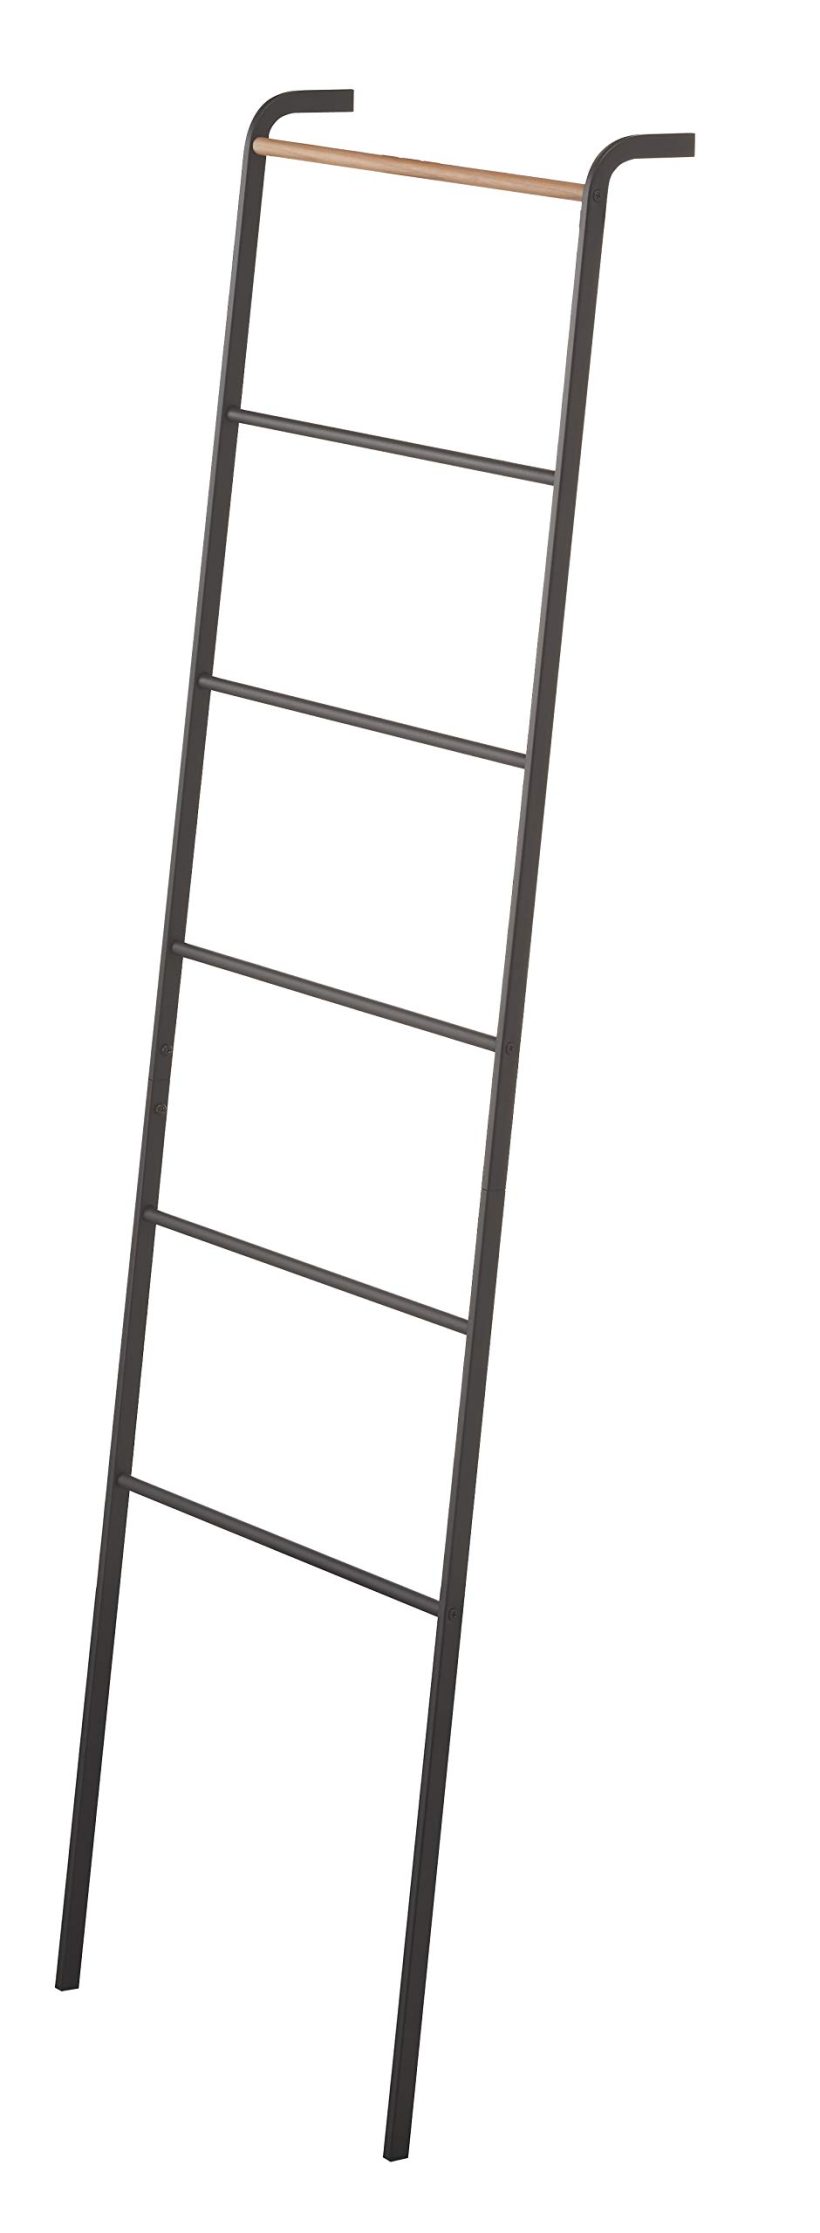 YAMAZAKI home Leaning Ladder Rack